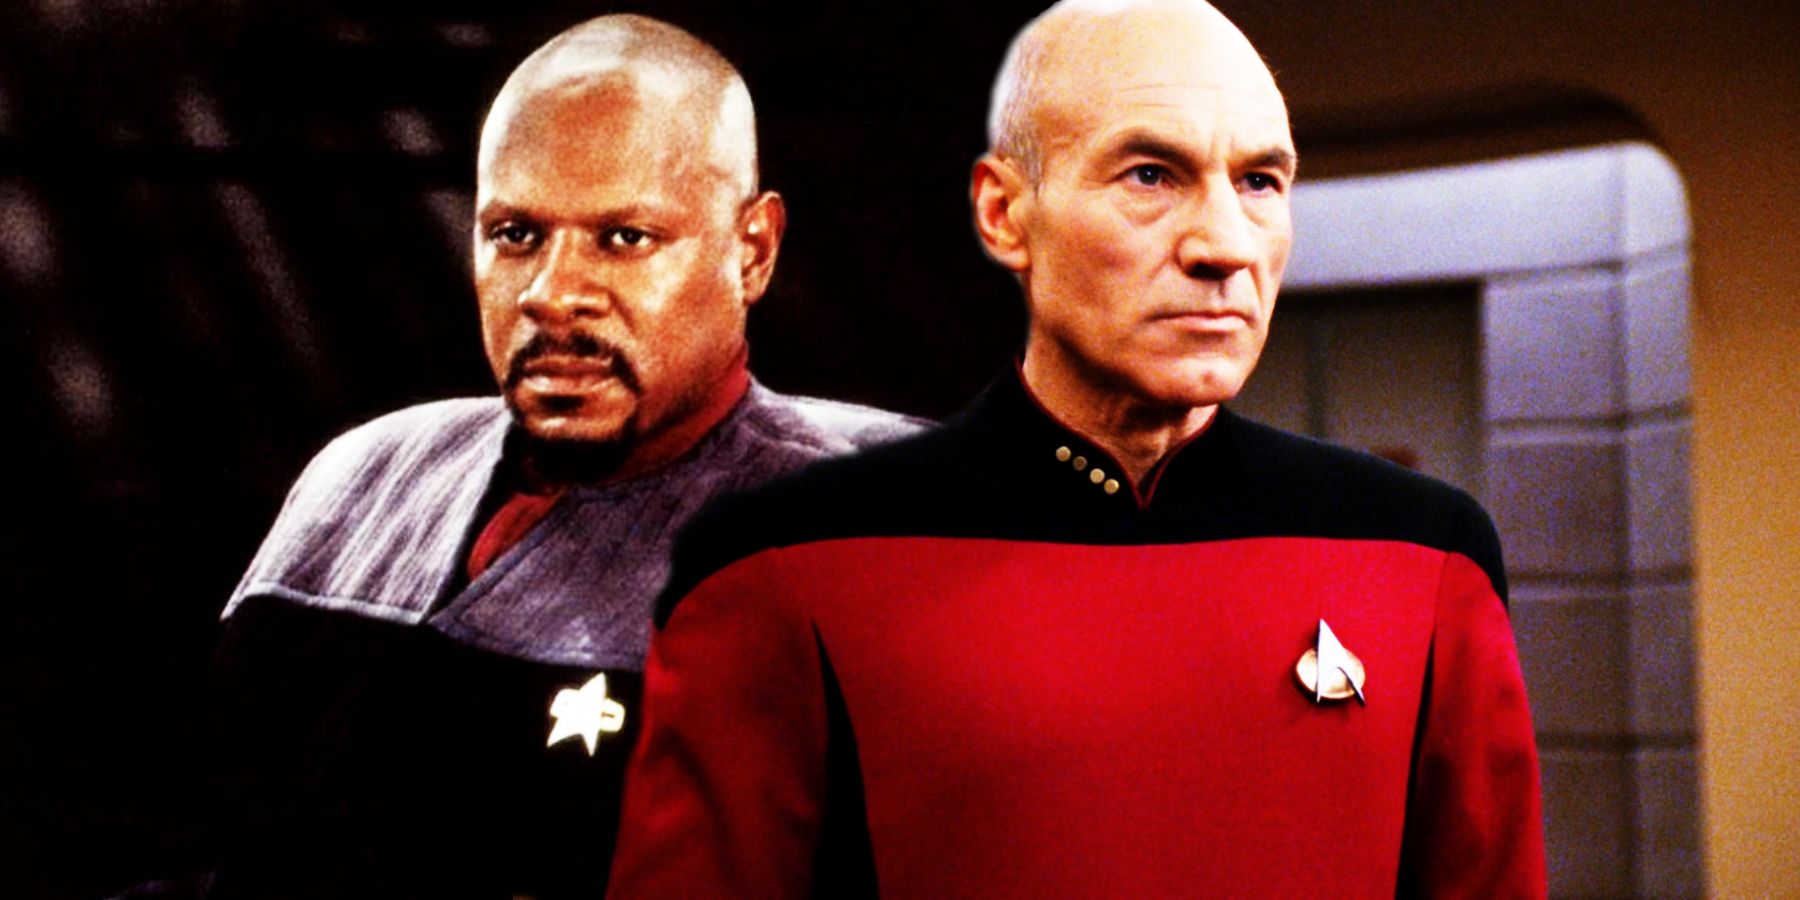 Avery Brooks as Benjamin Sisko and Patrick Stewart as Jean-Luc Picard